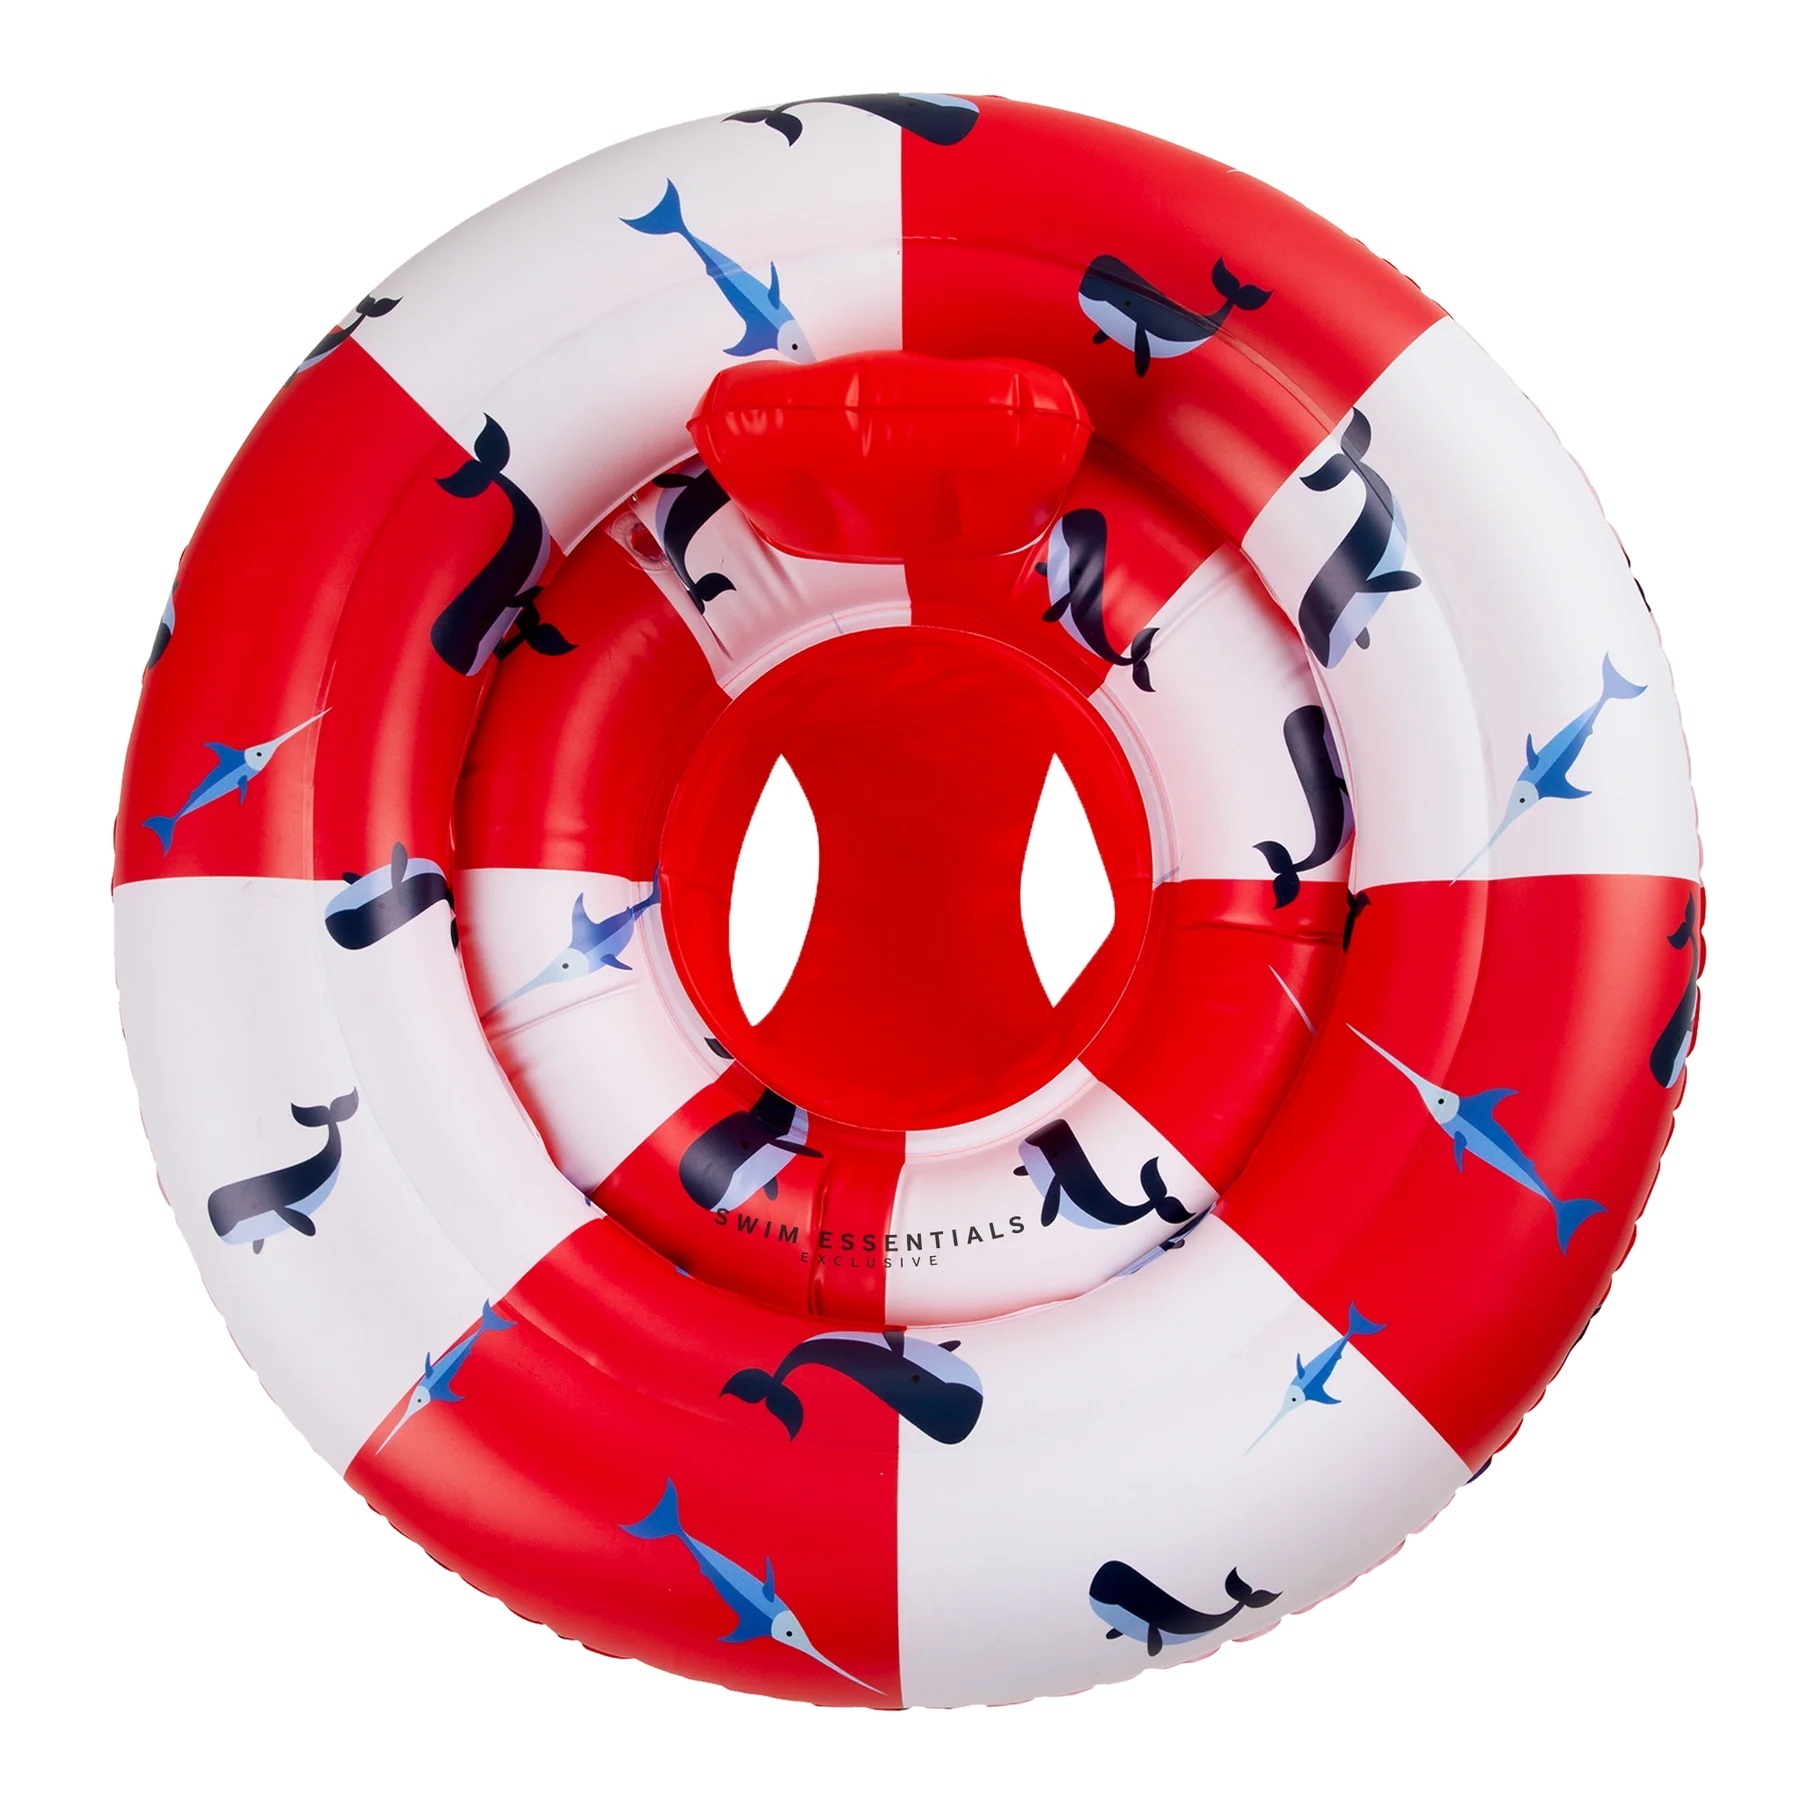 Swim Essentials 2020SE153 wit, rood